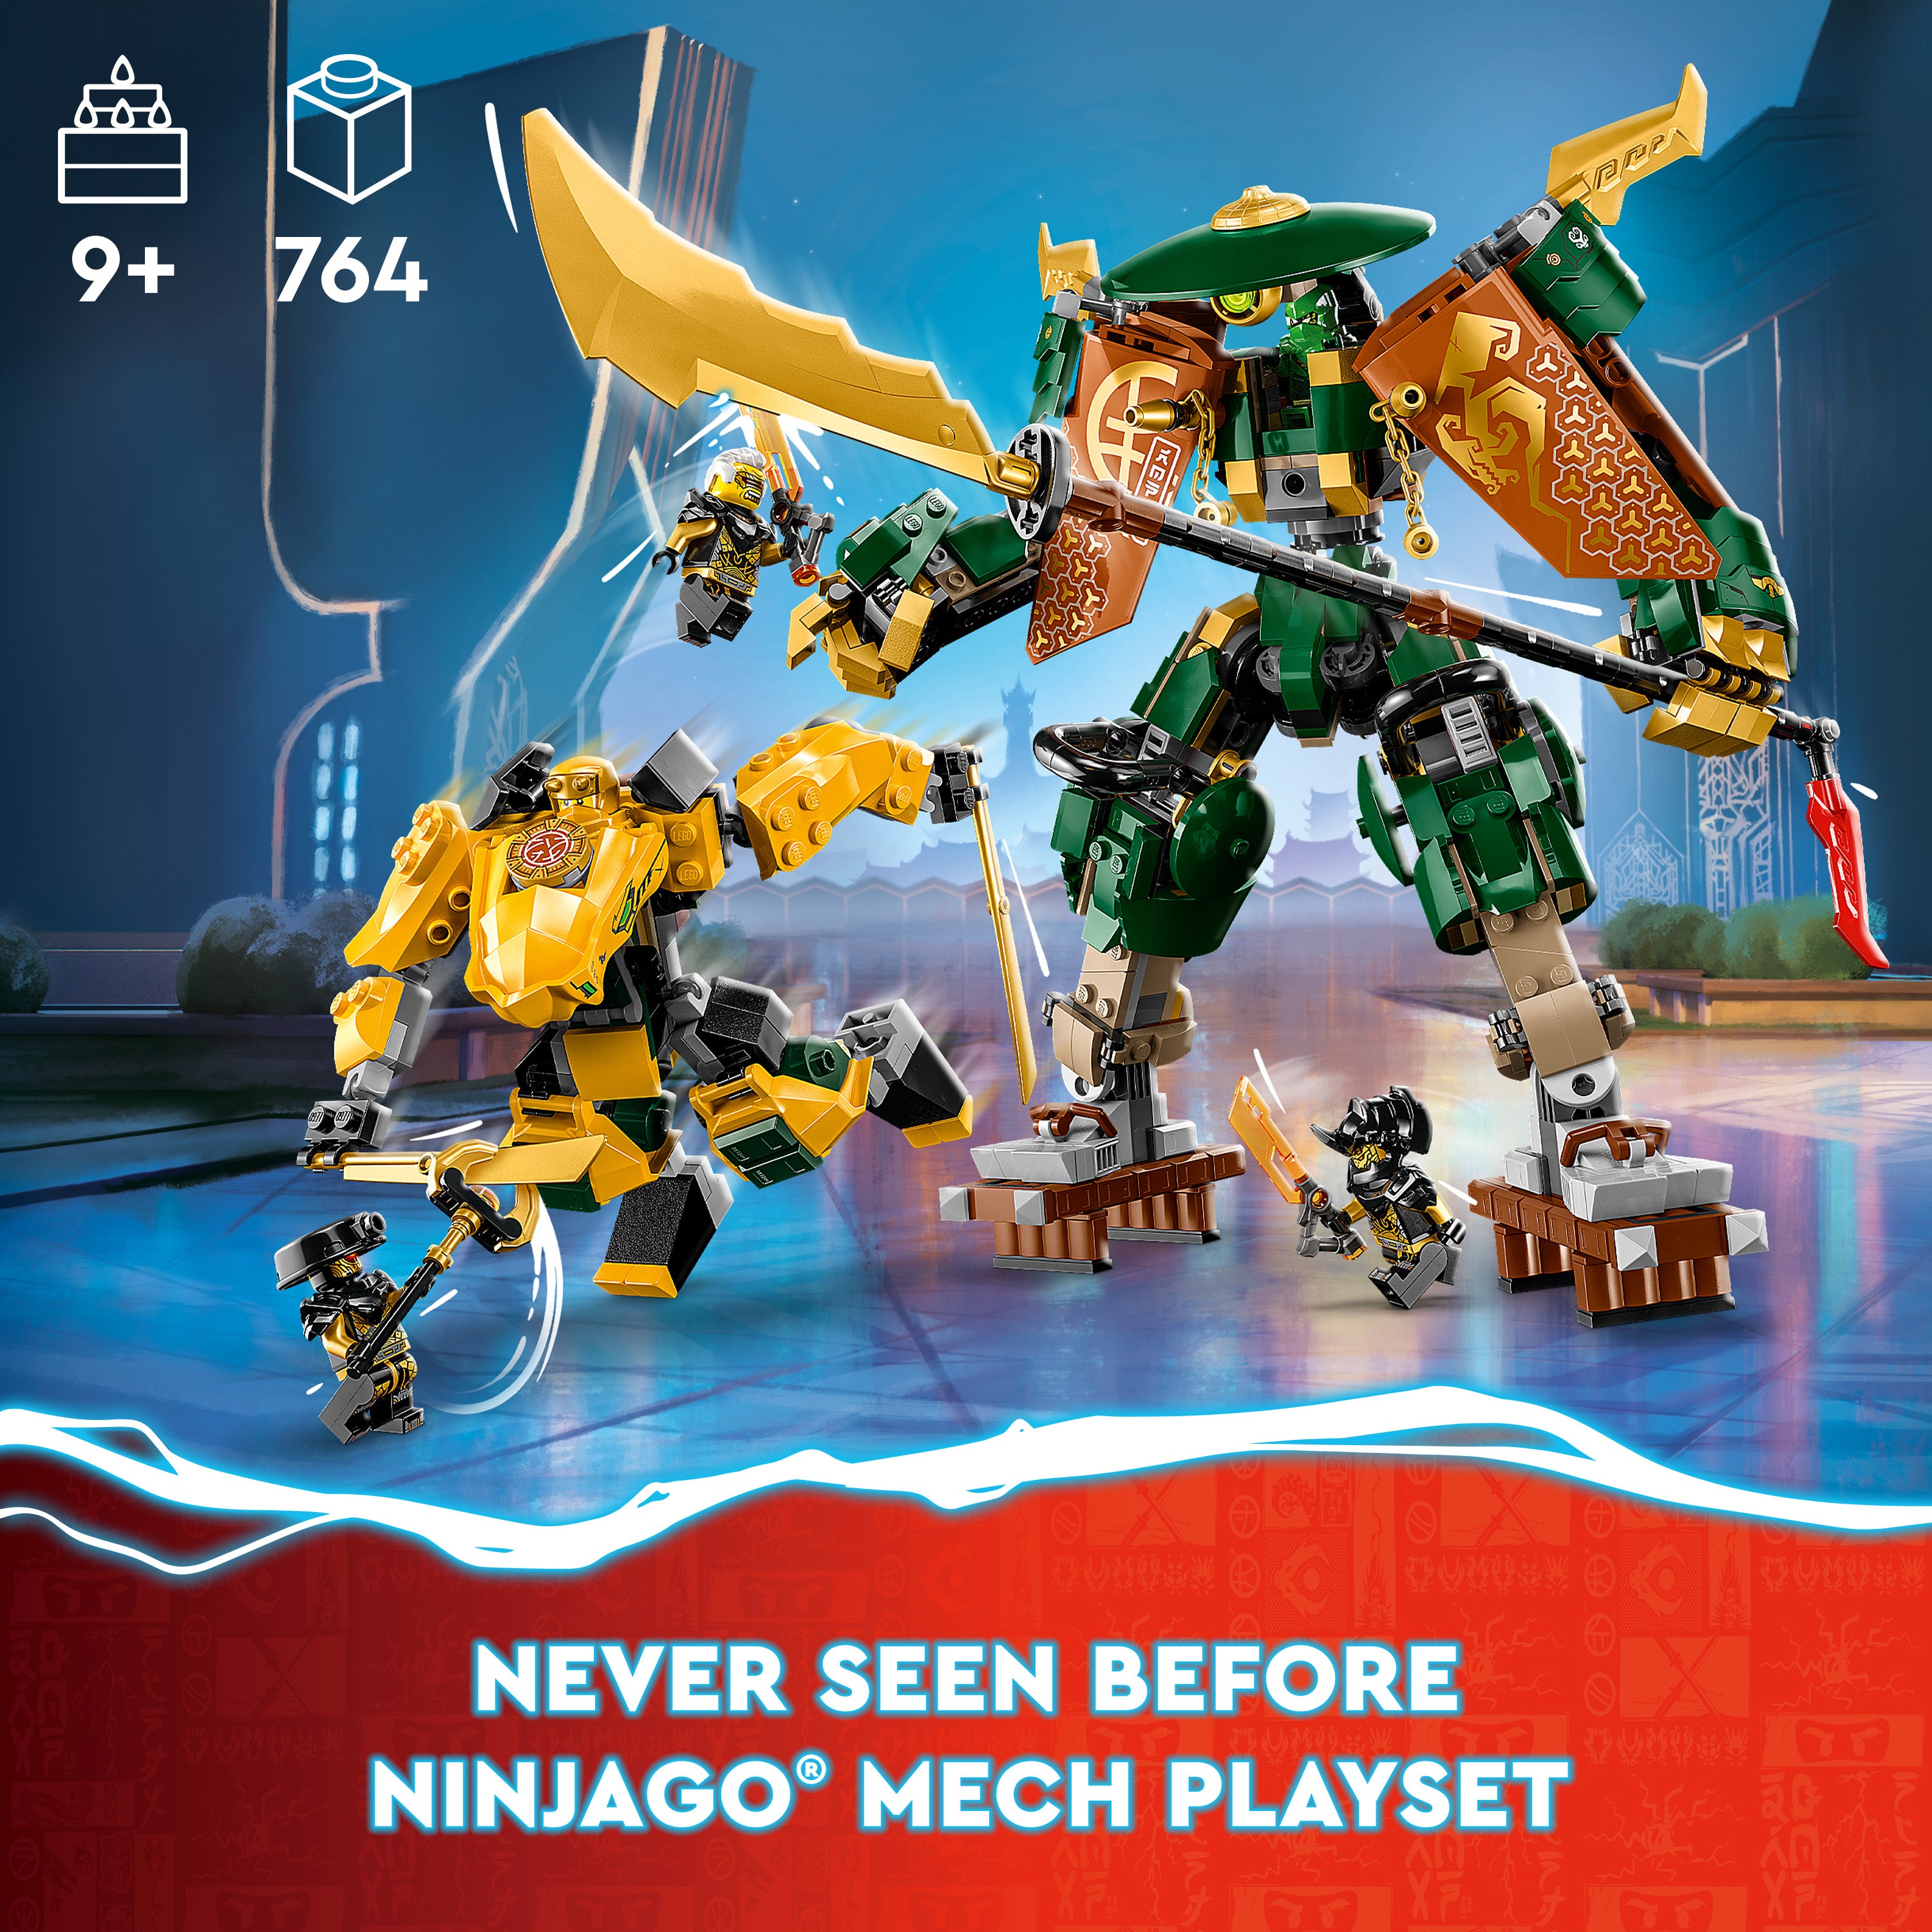 Lego 71794 Lloyd and Arins Ninja Team Mechs